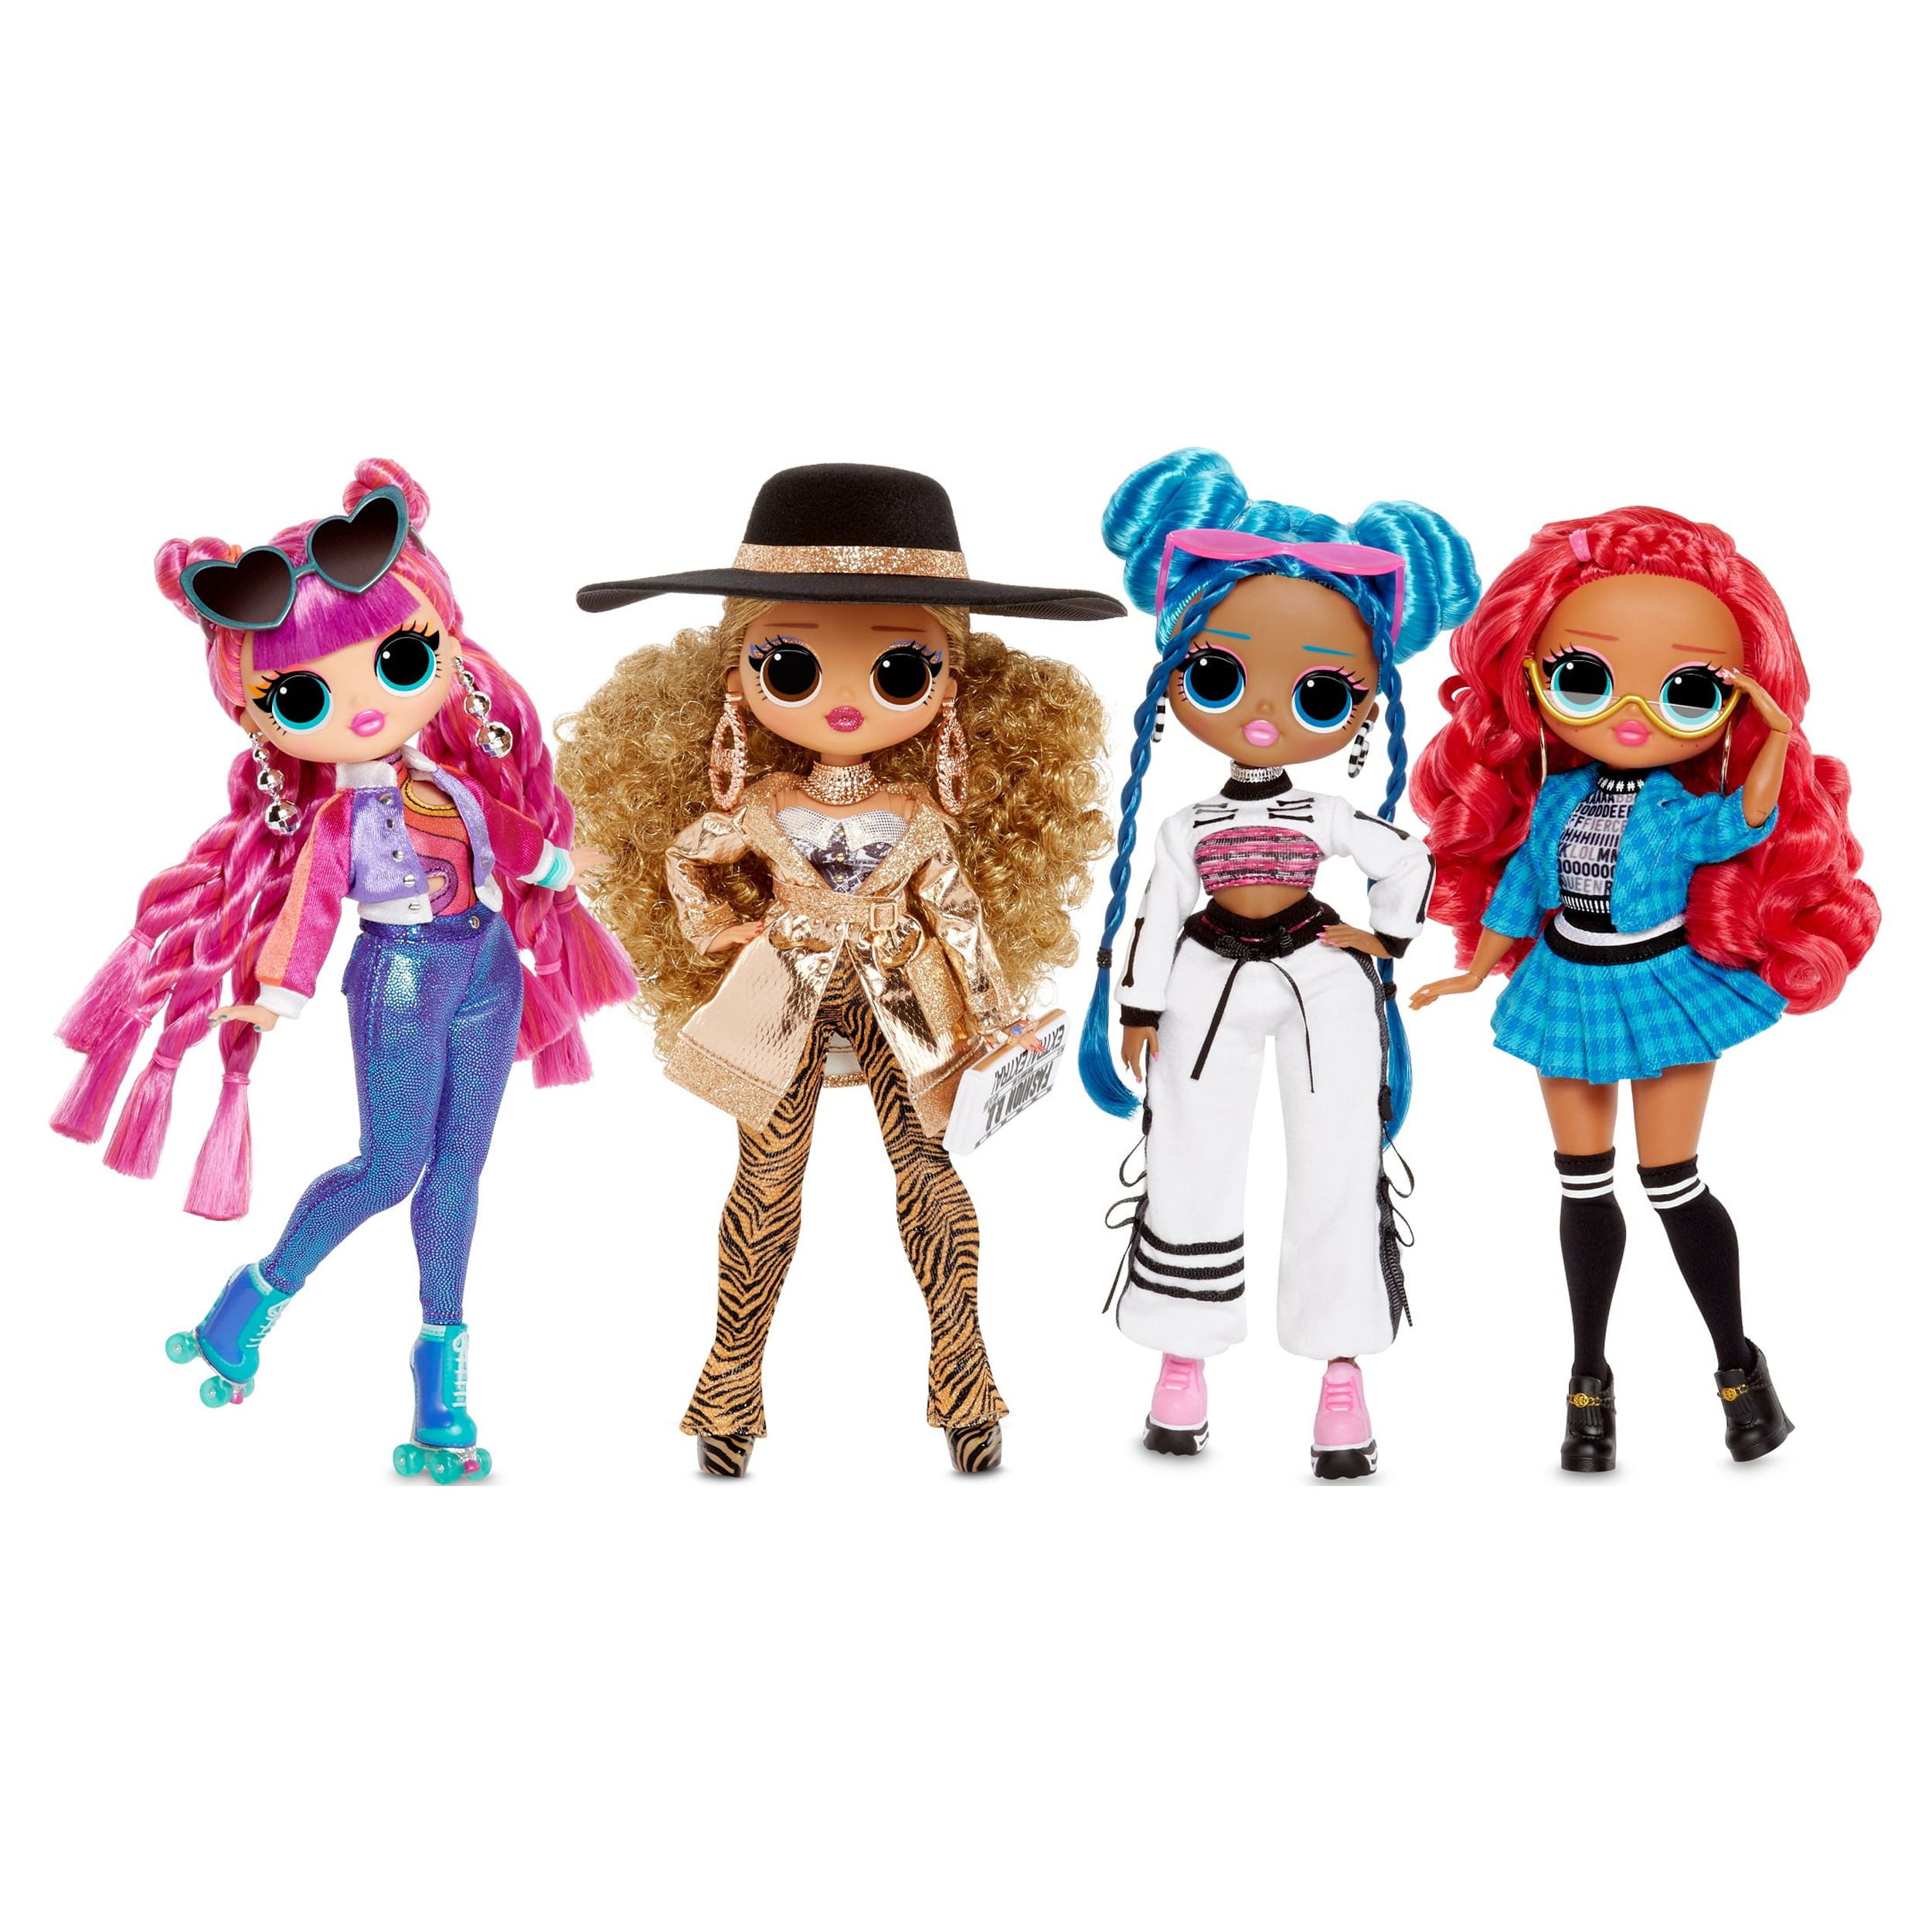 Lol surprise omg budget dolls. Pink chick, roller chick, & uptown girl :  r/Dolls